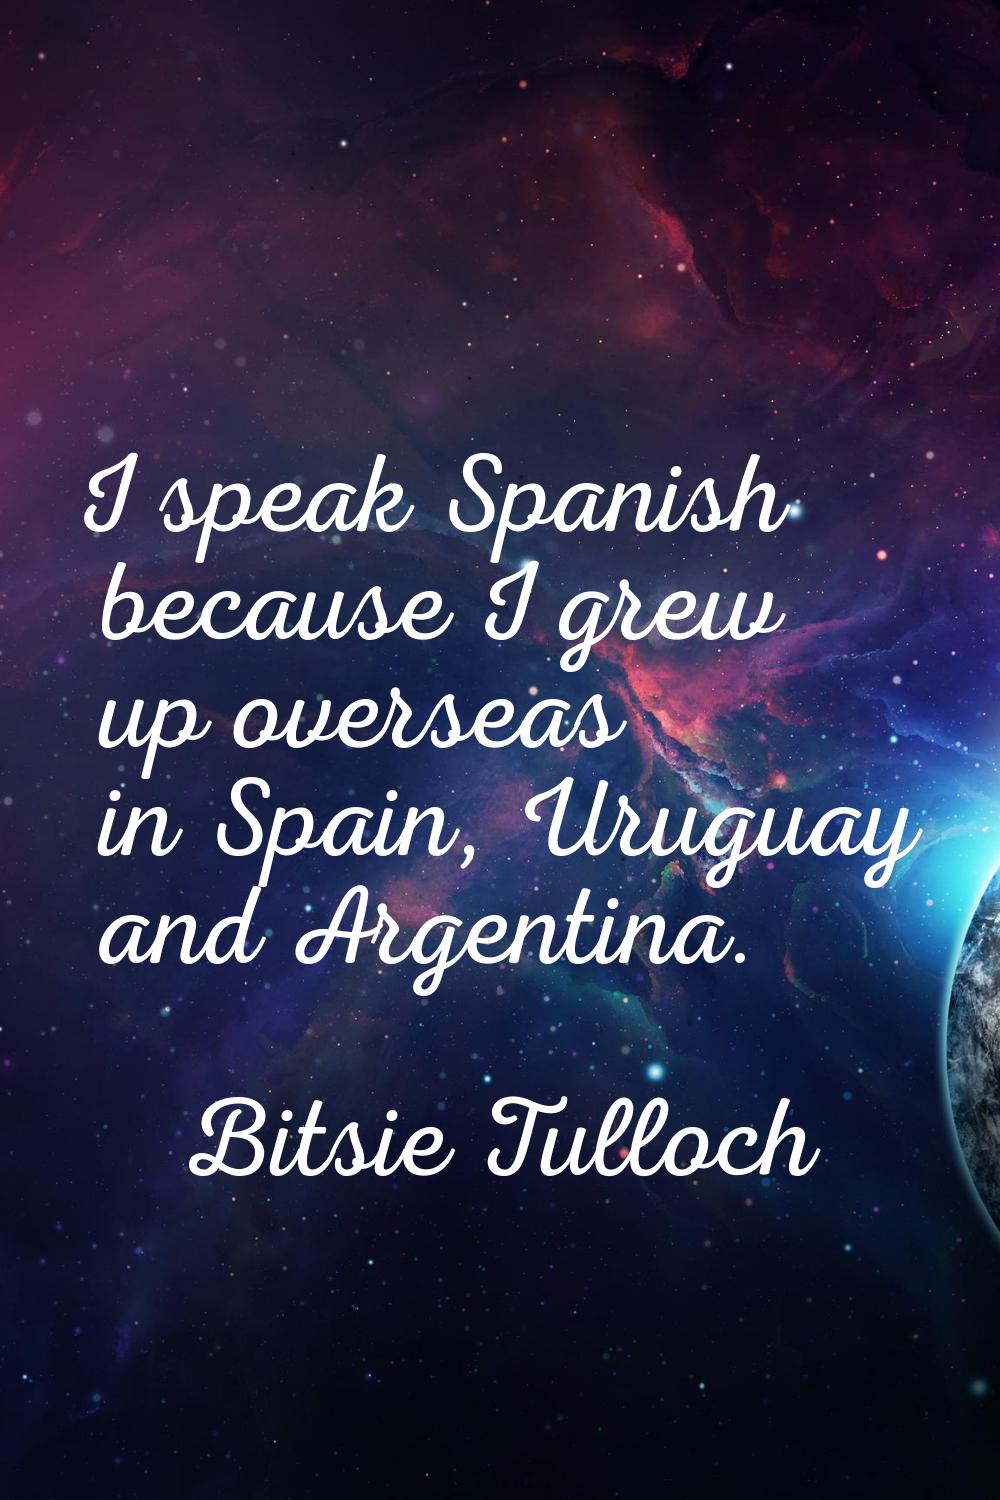 I speak Spanish because I grew up overseas in Spain, Uruguay and Argentina.